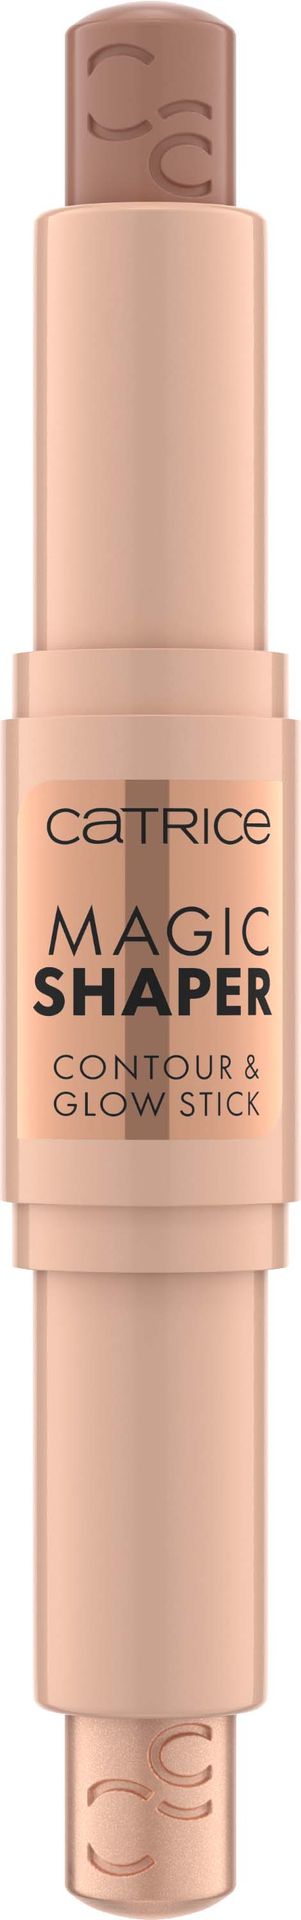 Catrice Magic Shaper Contour & Glow Stick 010 Light - sztyft do konturowania 010 Light